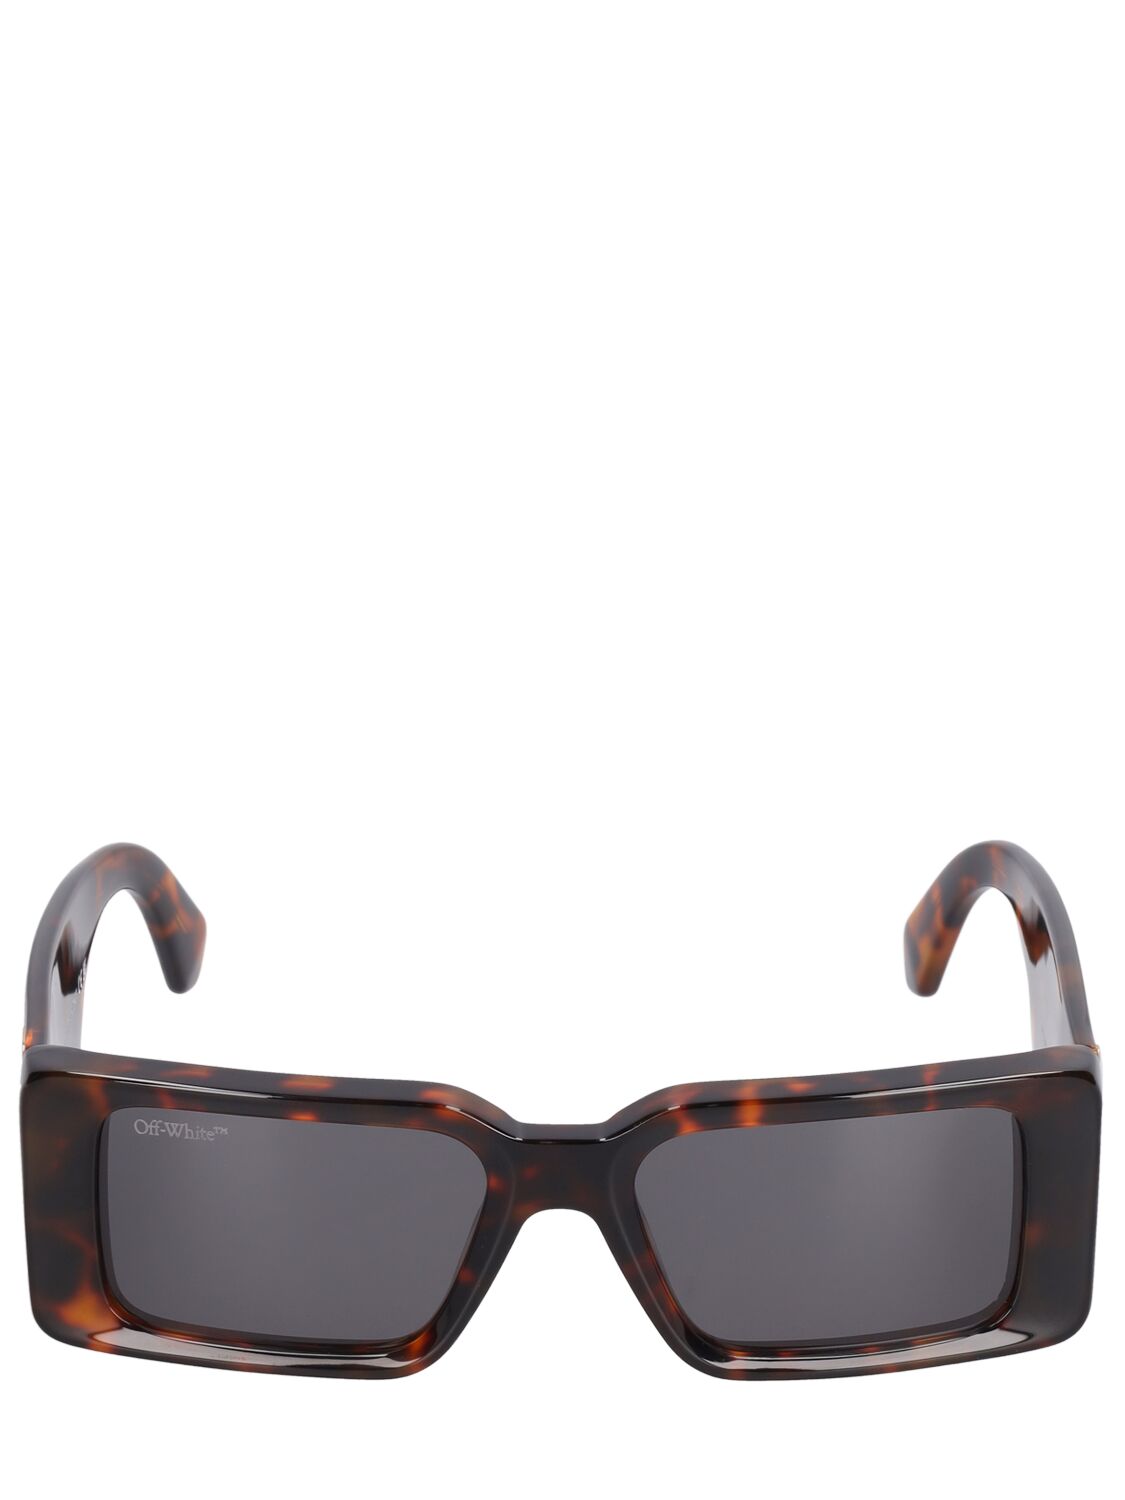 Off-white Milano Acetate Sunglasses In Black